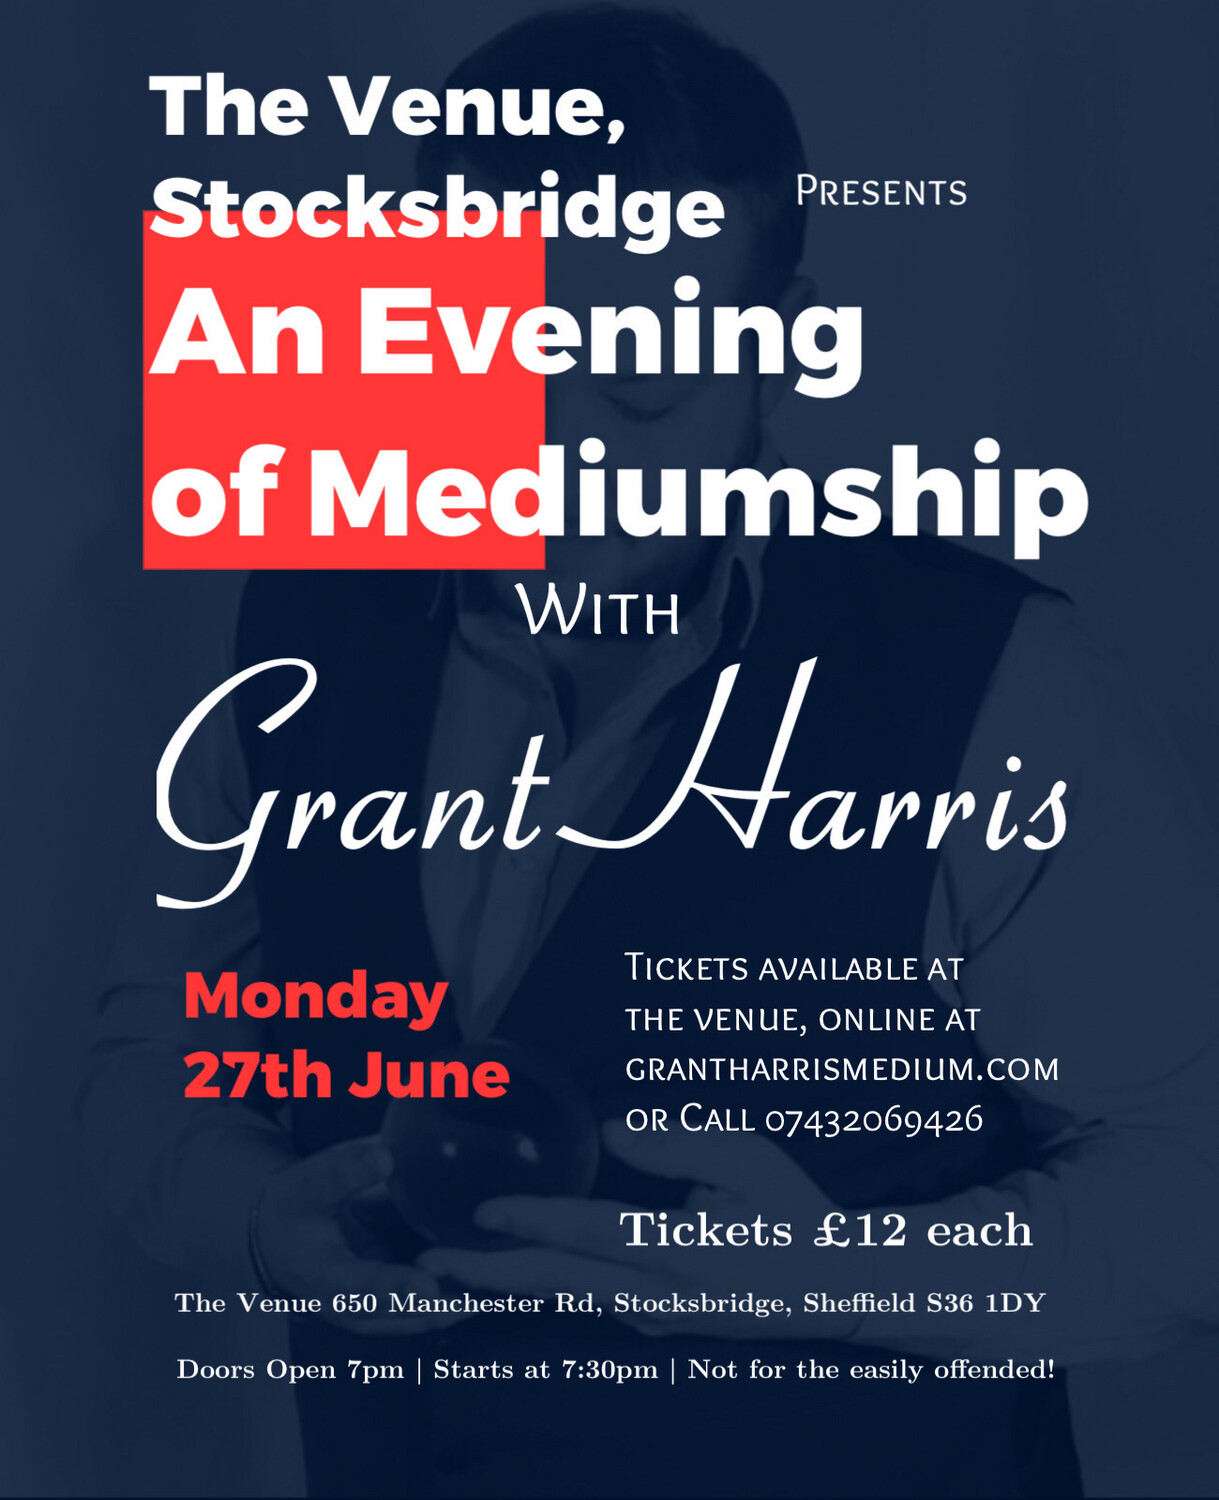 Evening of Mediumship, The Venue, Stocksbridge, Monday 27th June 2022